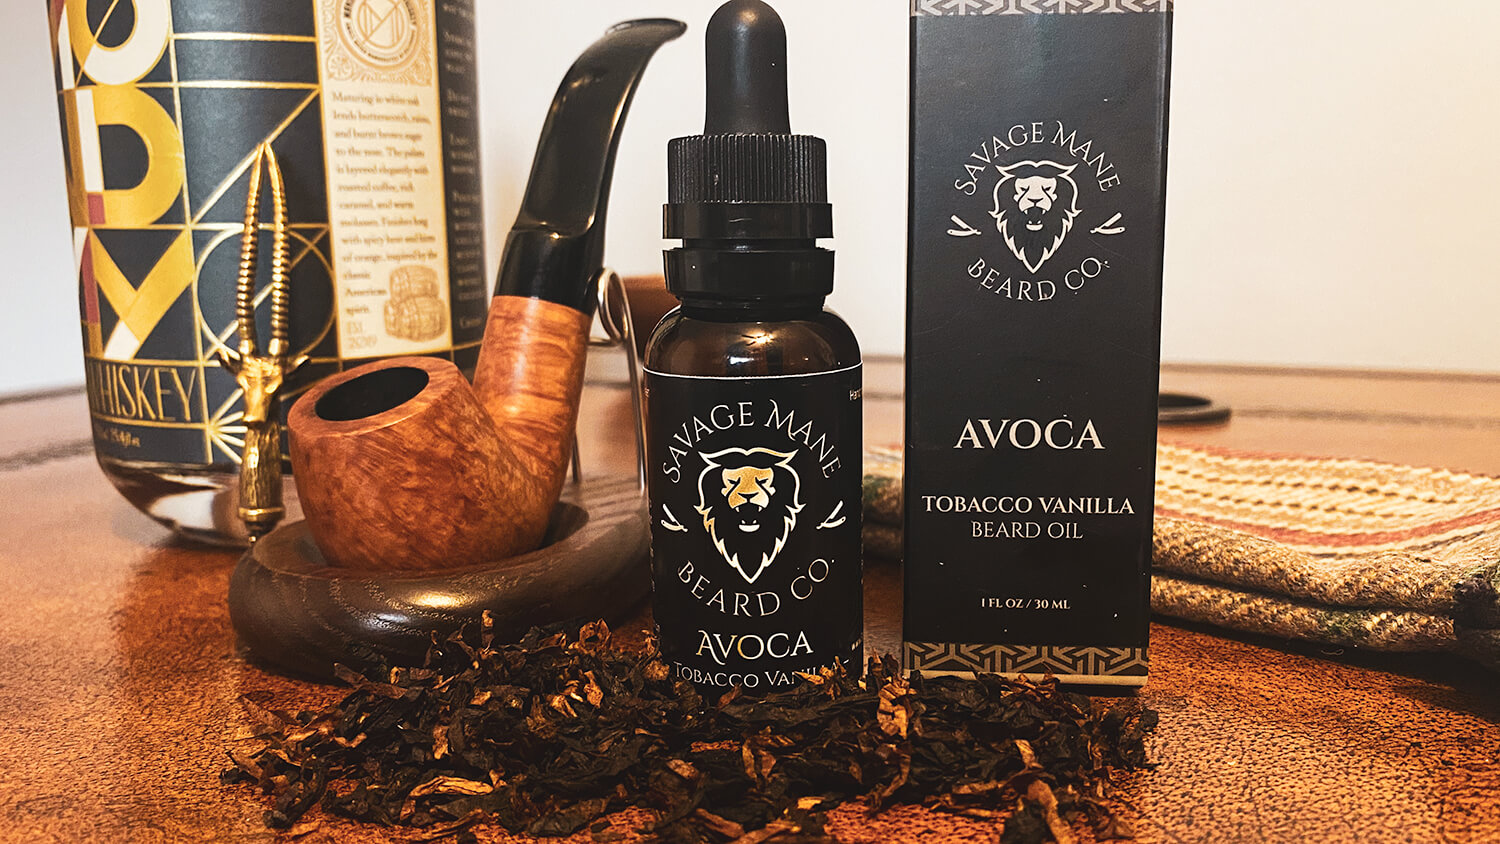 Avoca Beard Oil from Savage Mane Beard Co.